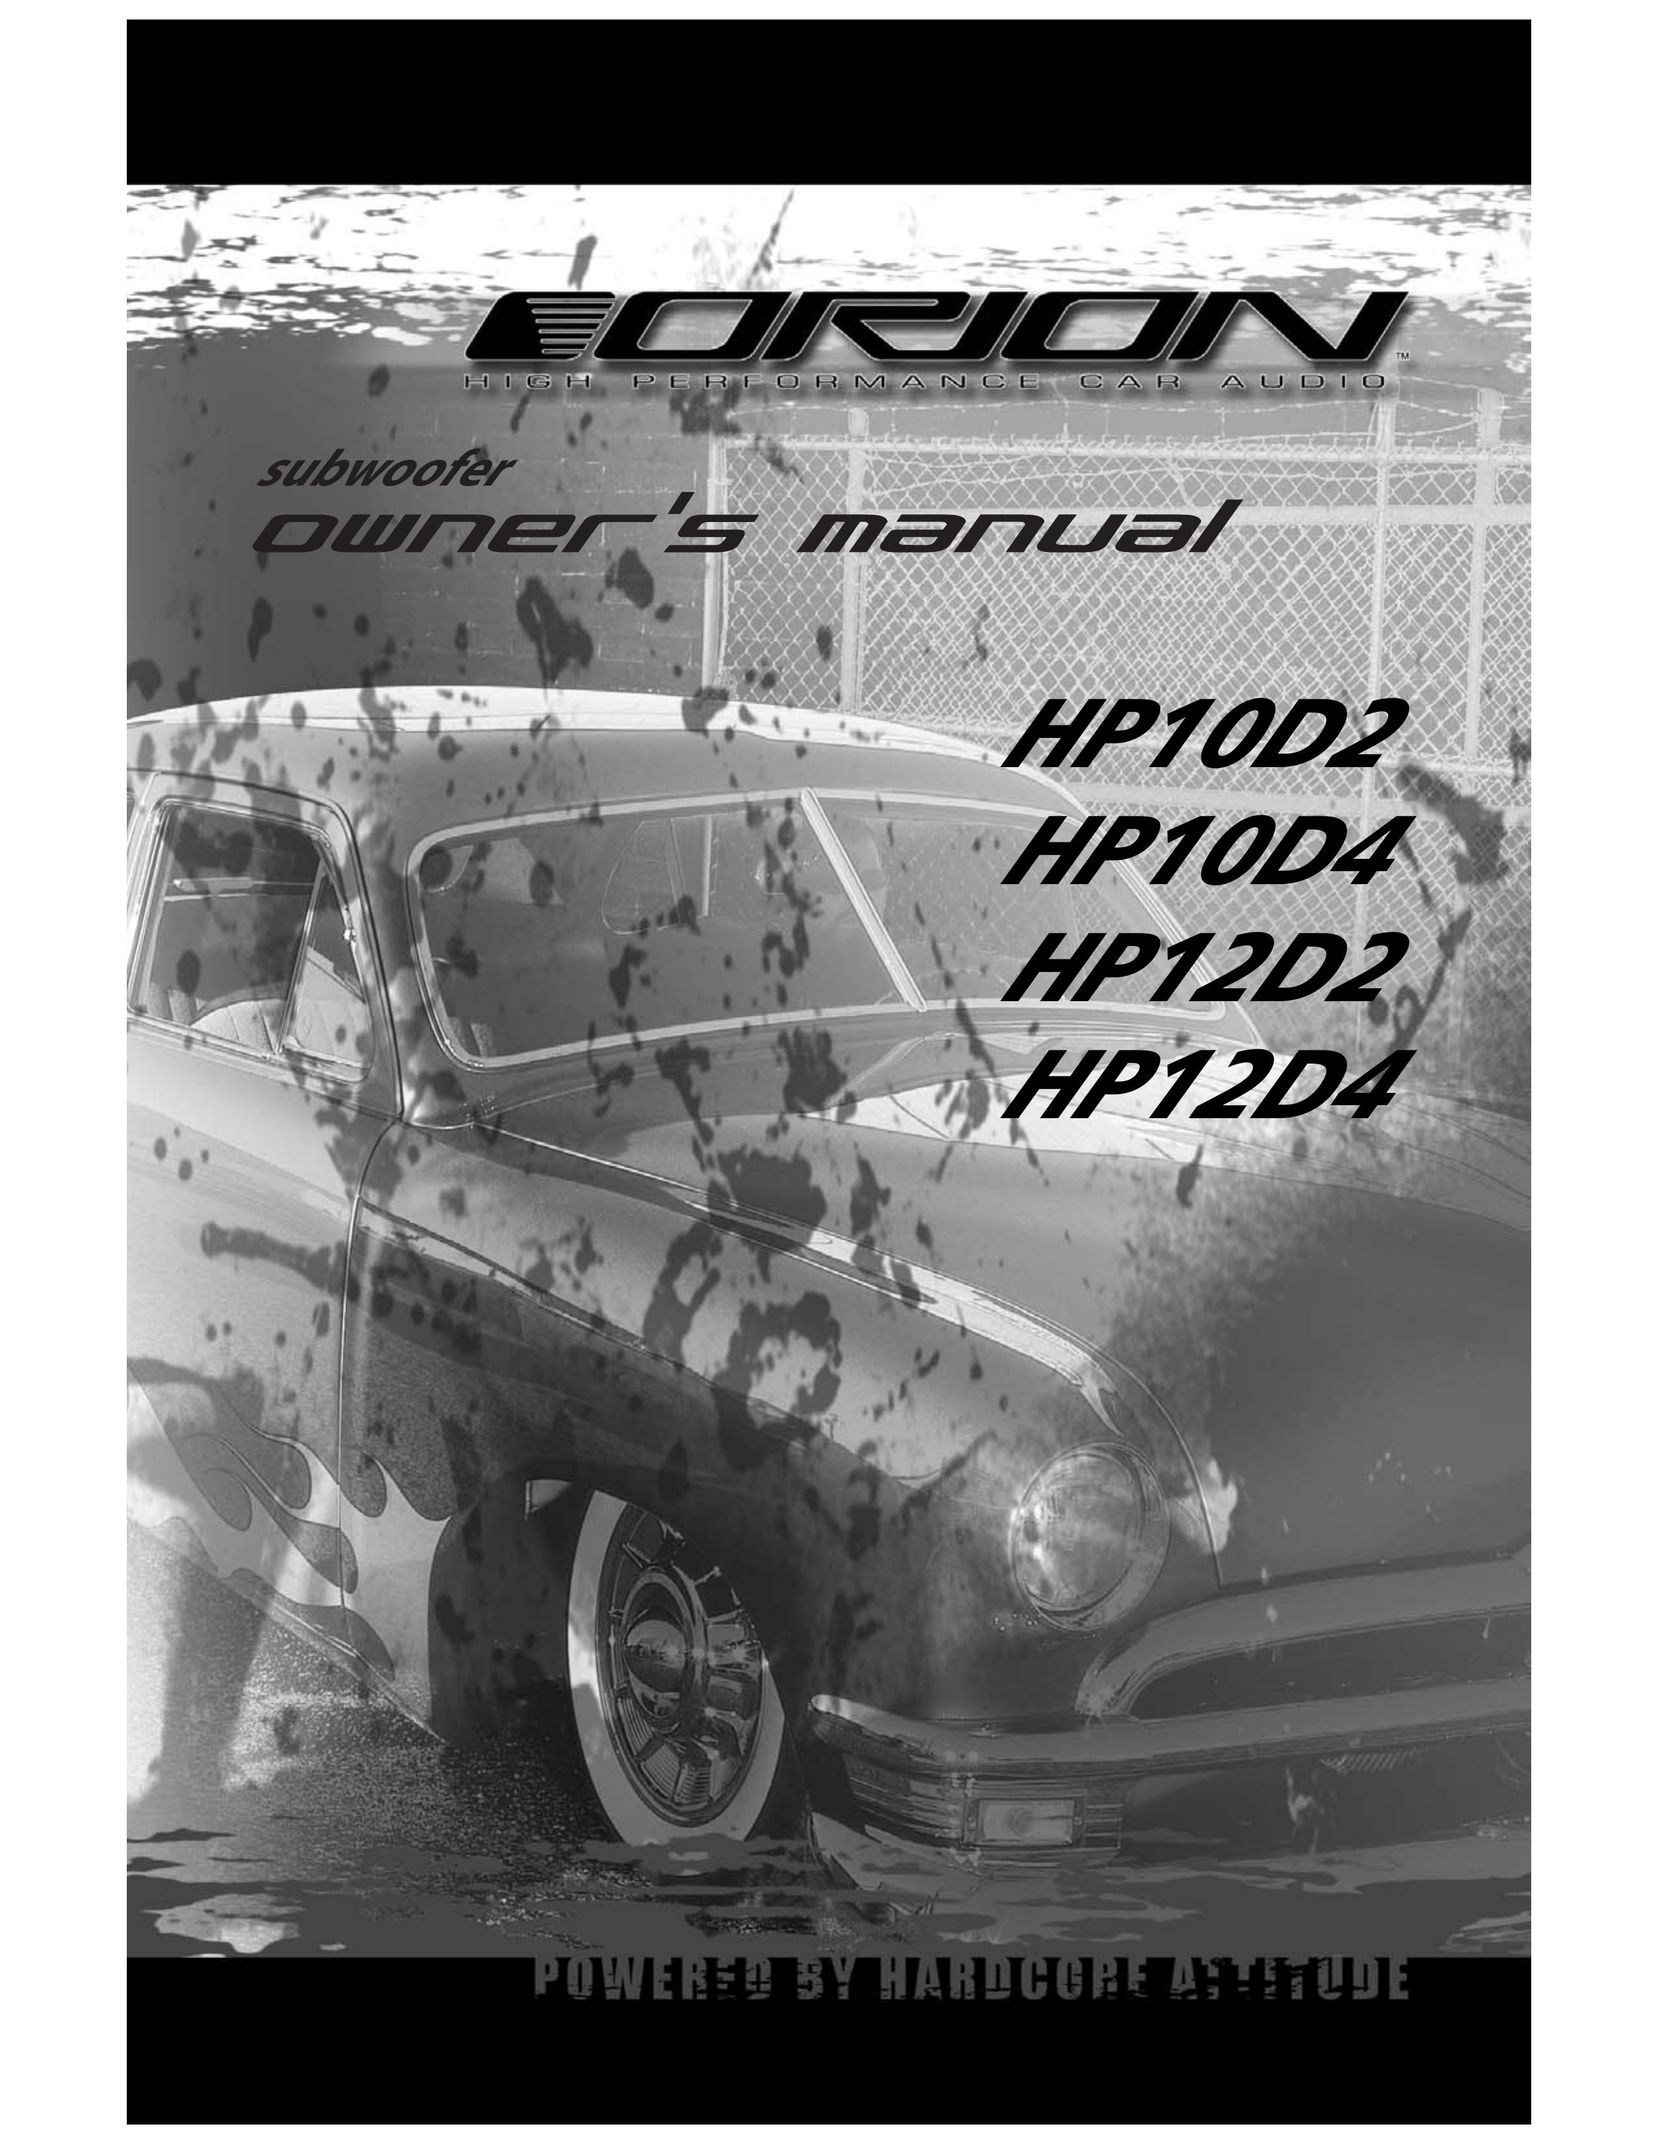 Orion Car Audio HP12D2 Speaker User Manual